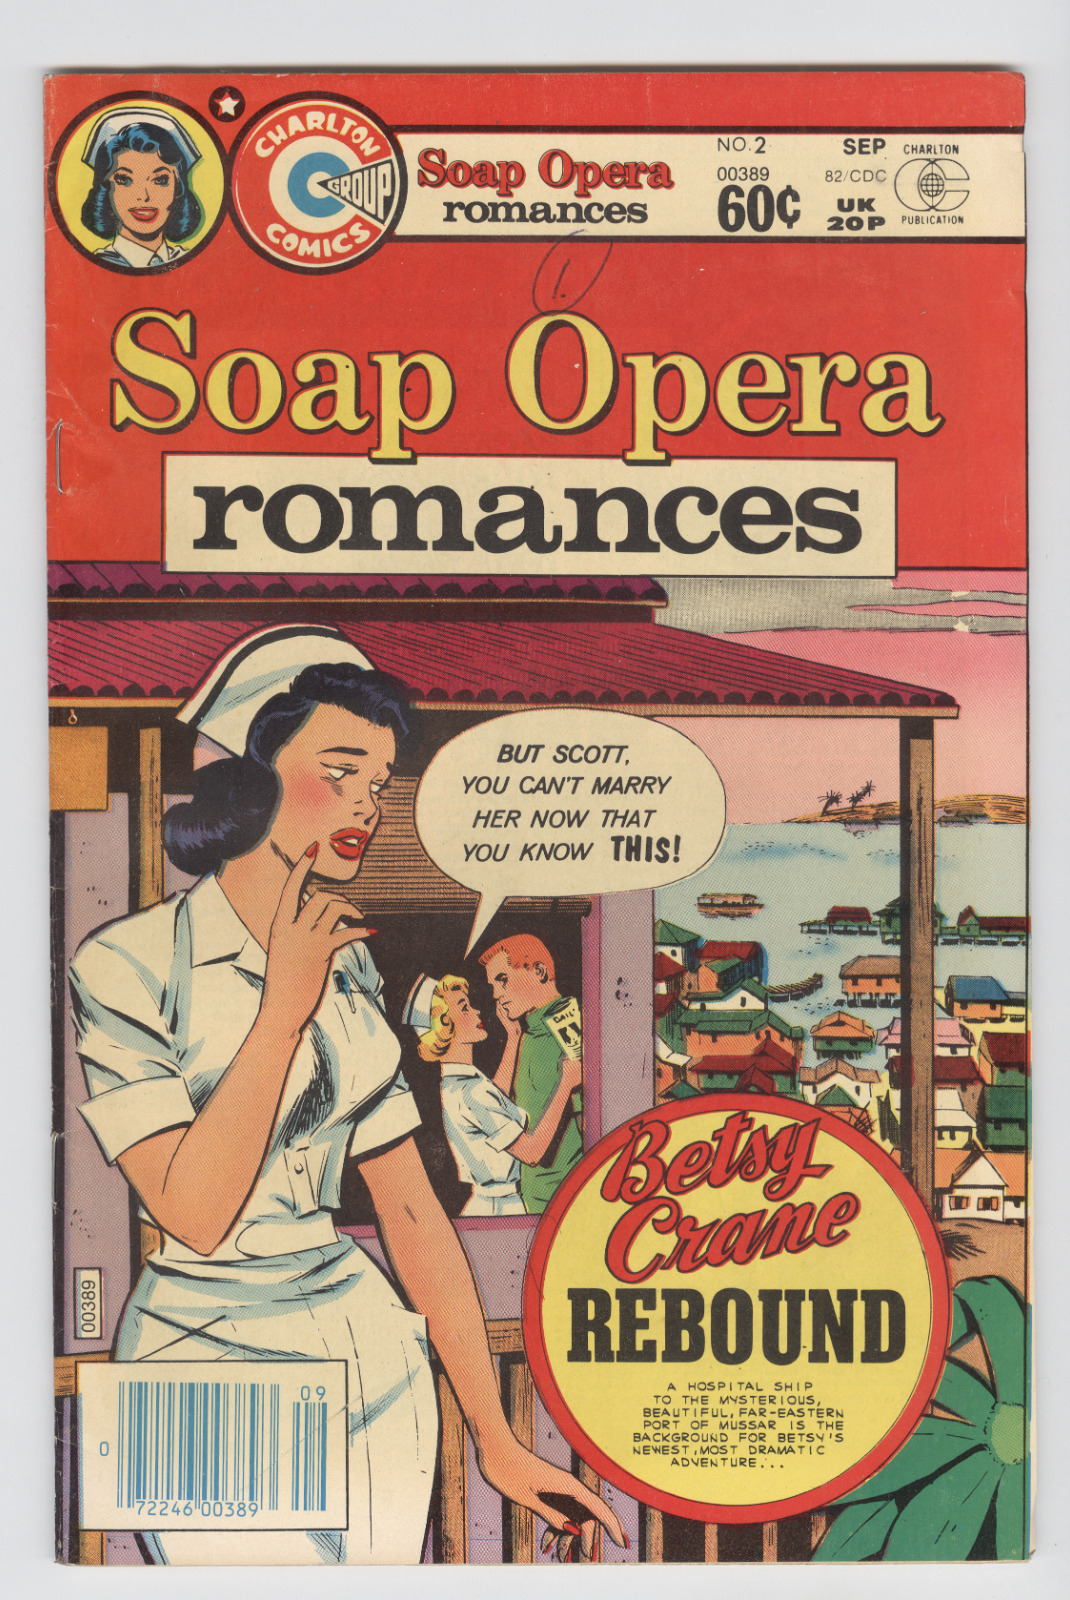 Soap Opera Romances #2 September 1982 VG+